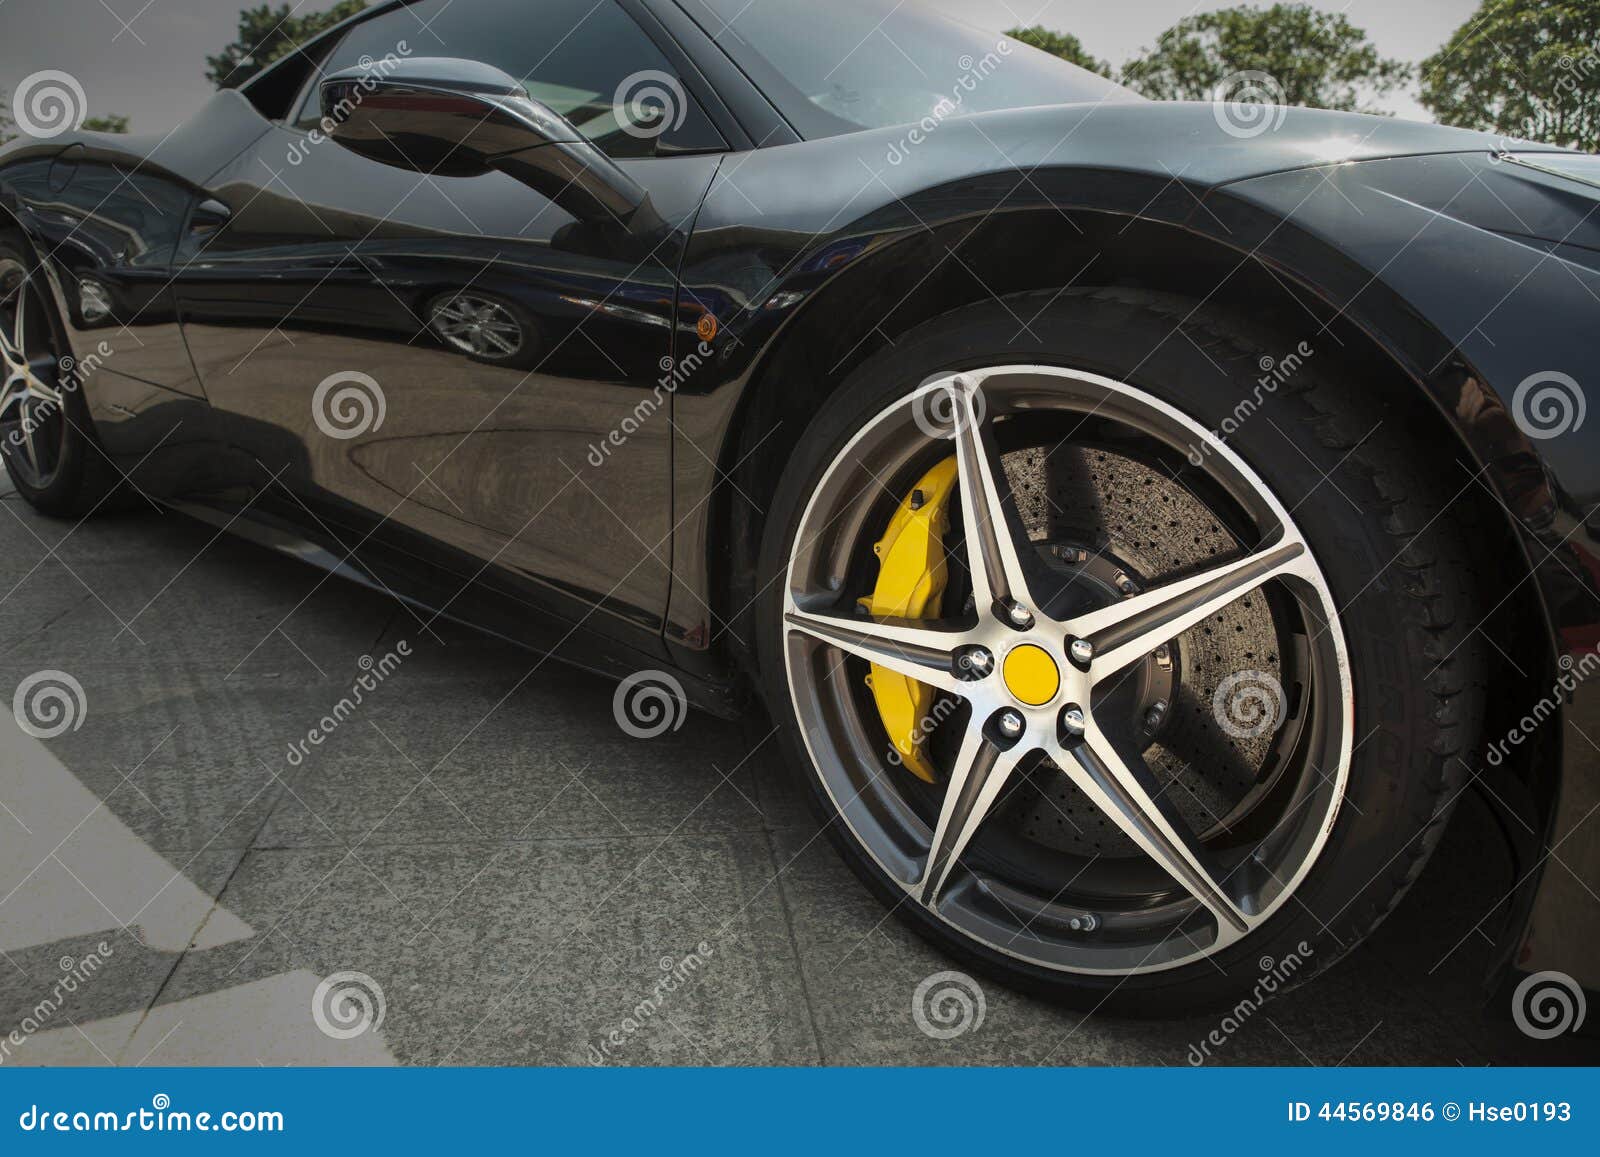 wheel of supercar